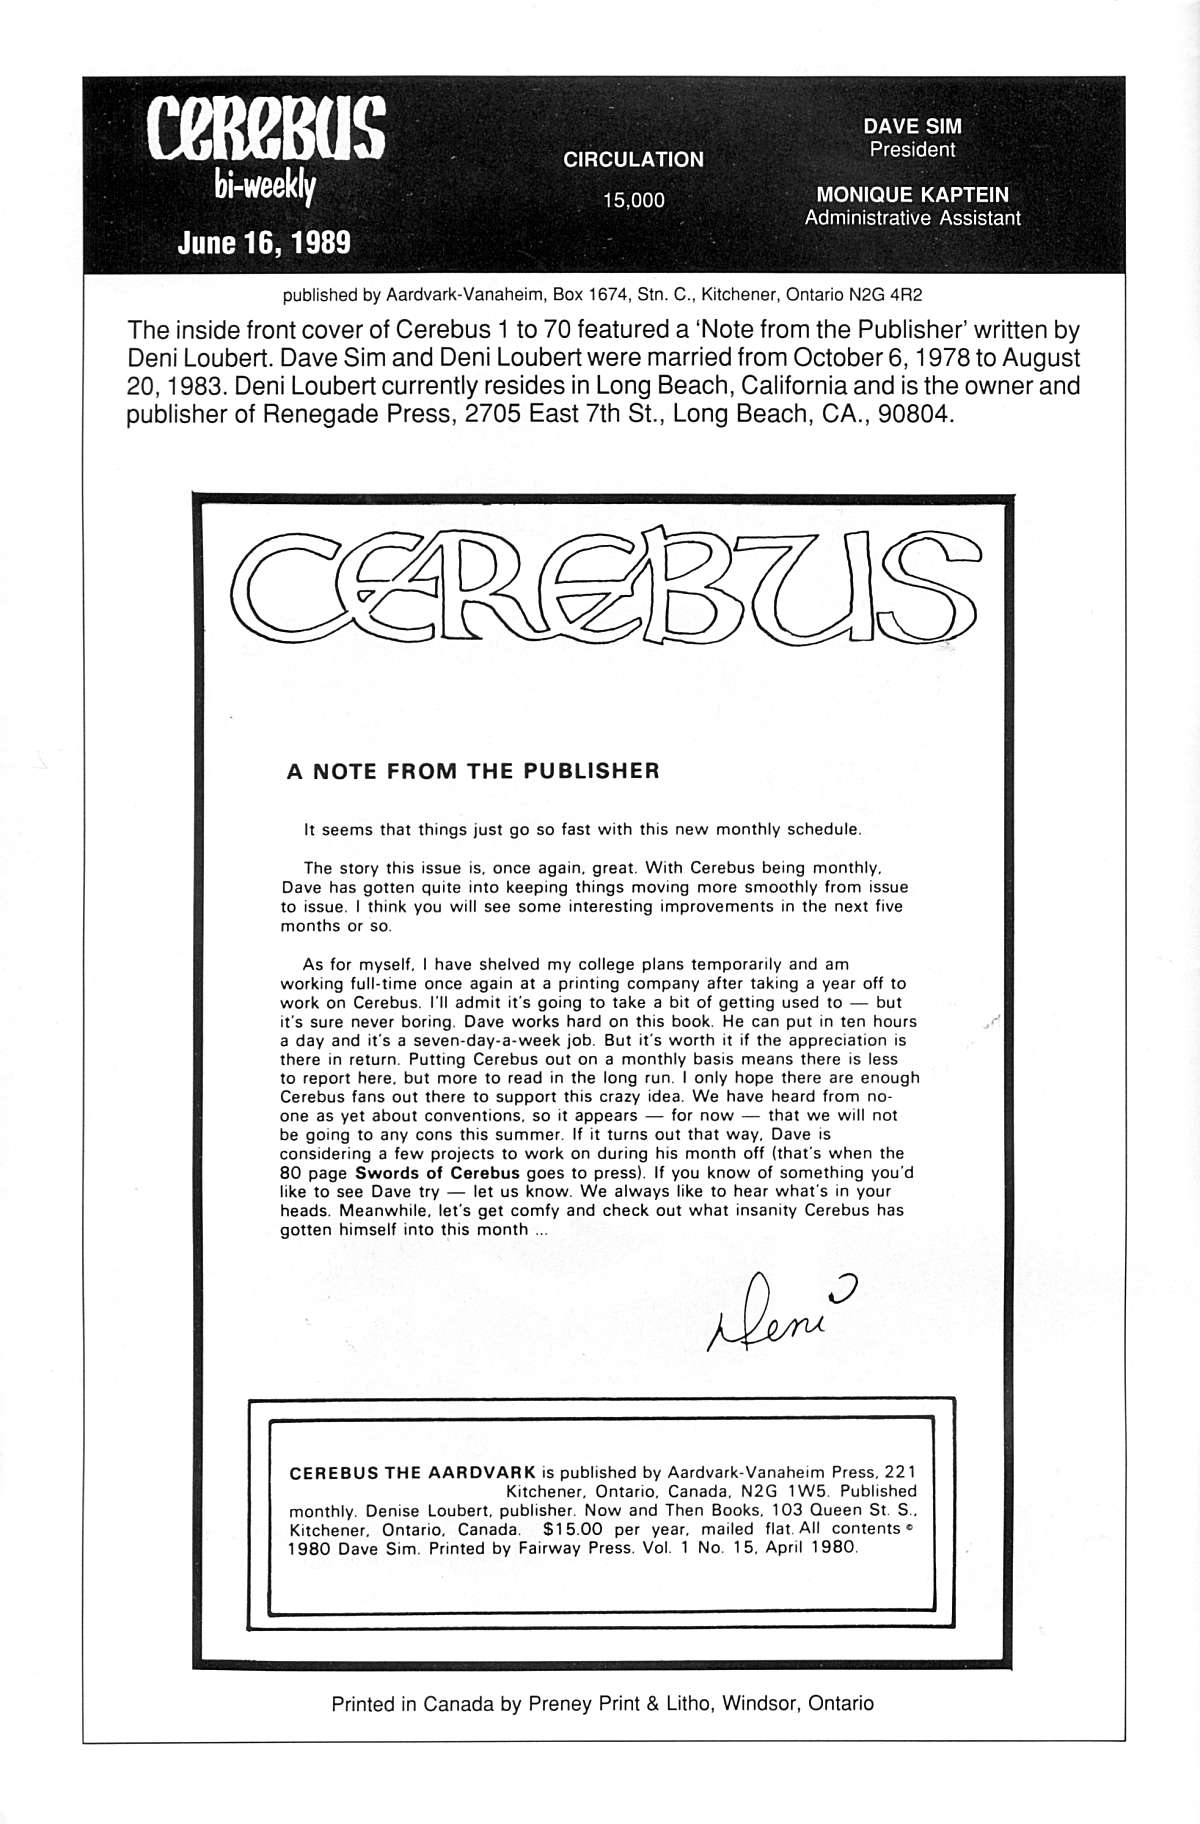 Read online Cerebus comic -  Issue #15 - 2